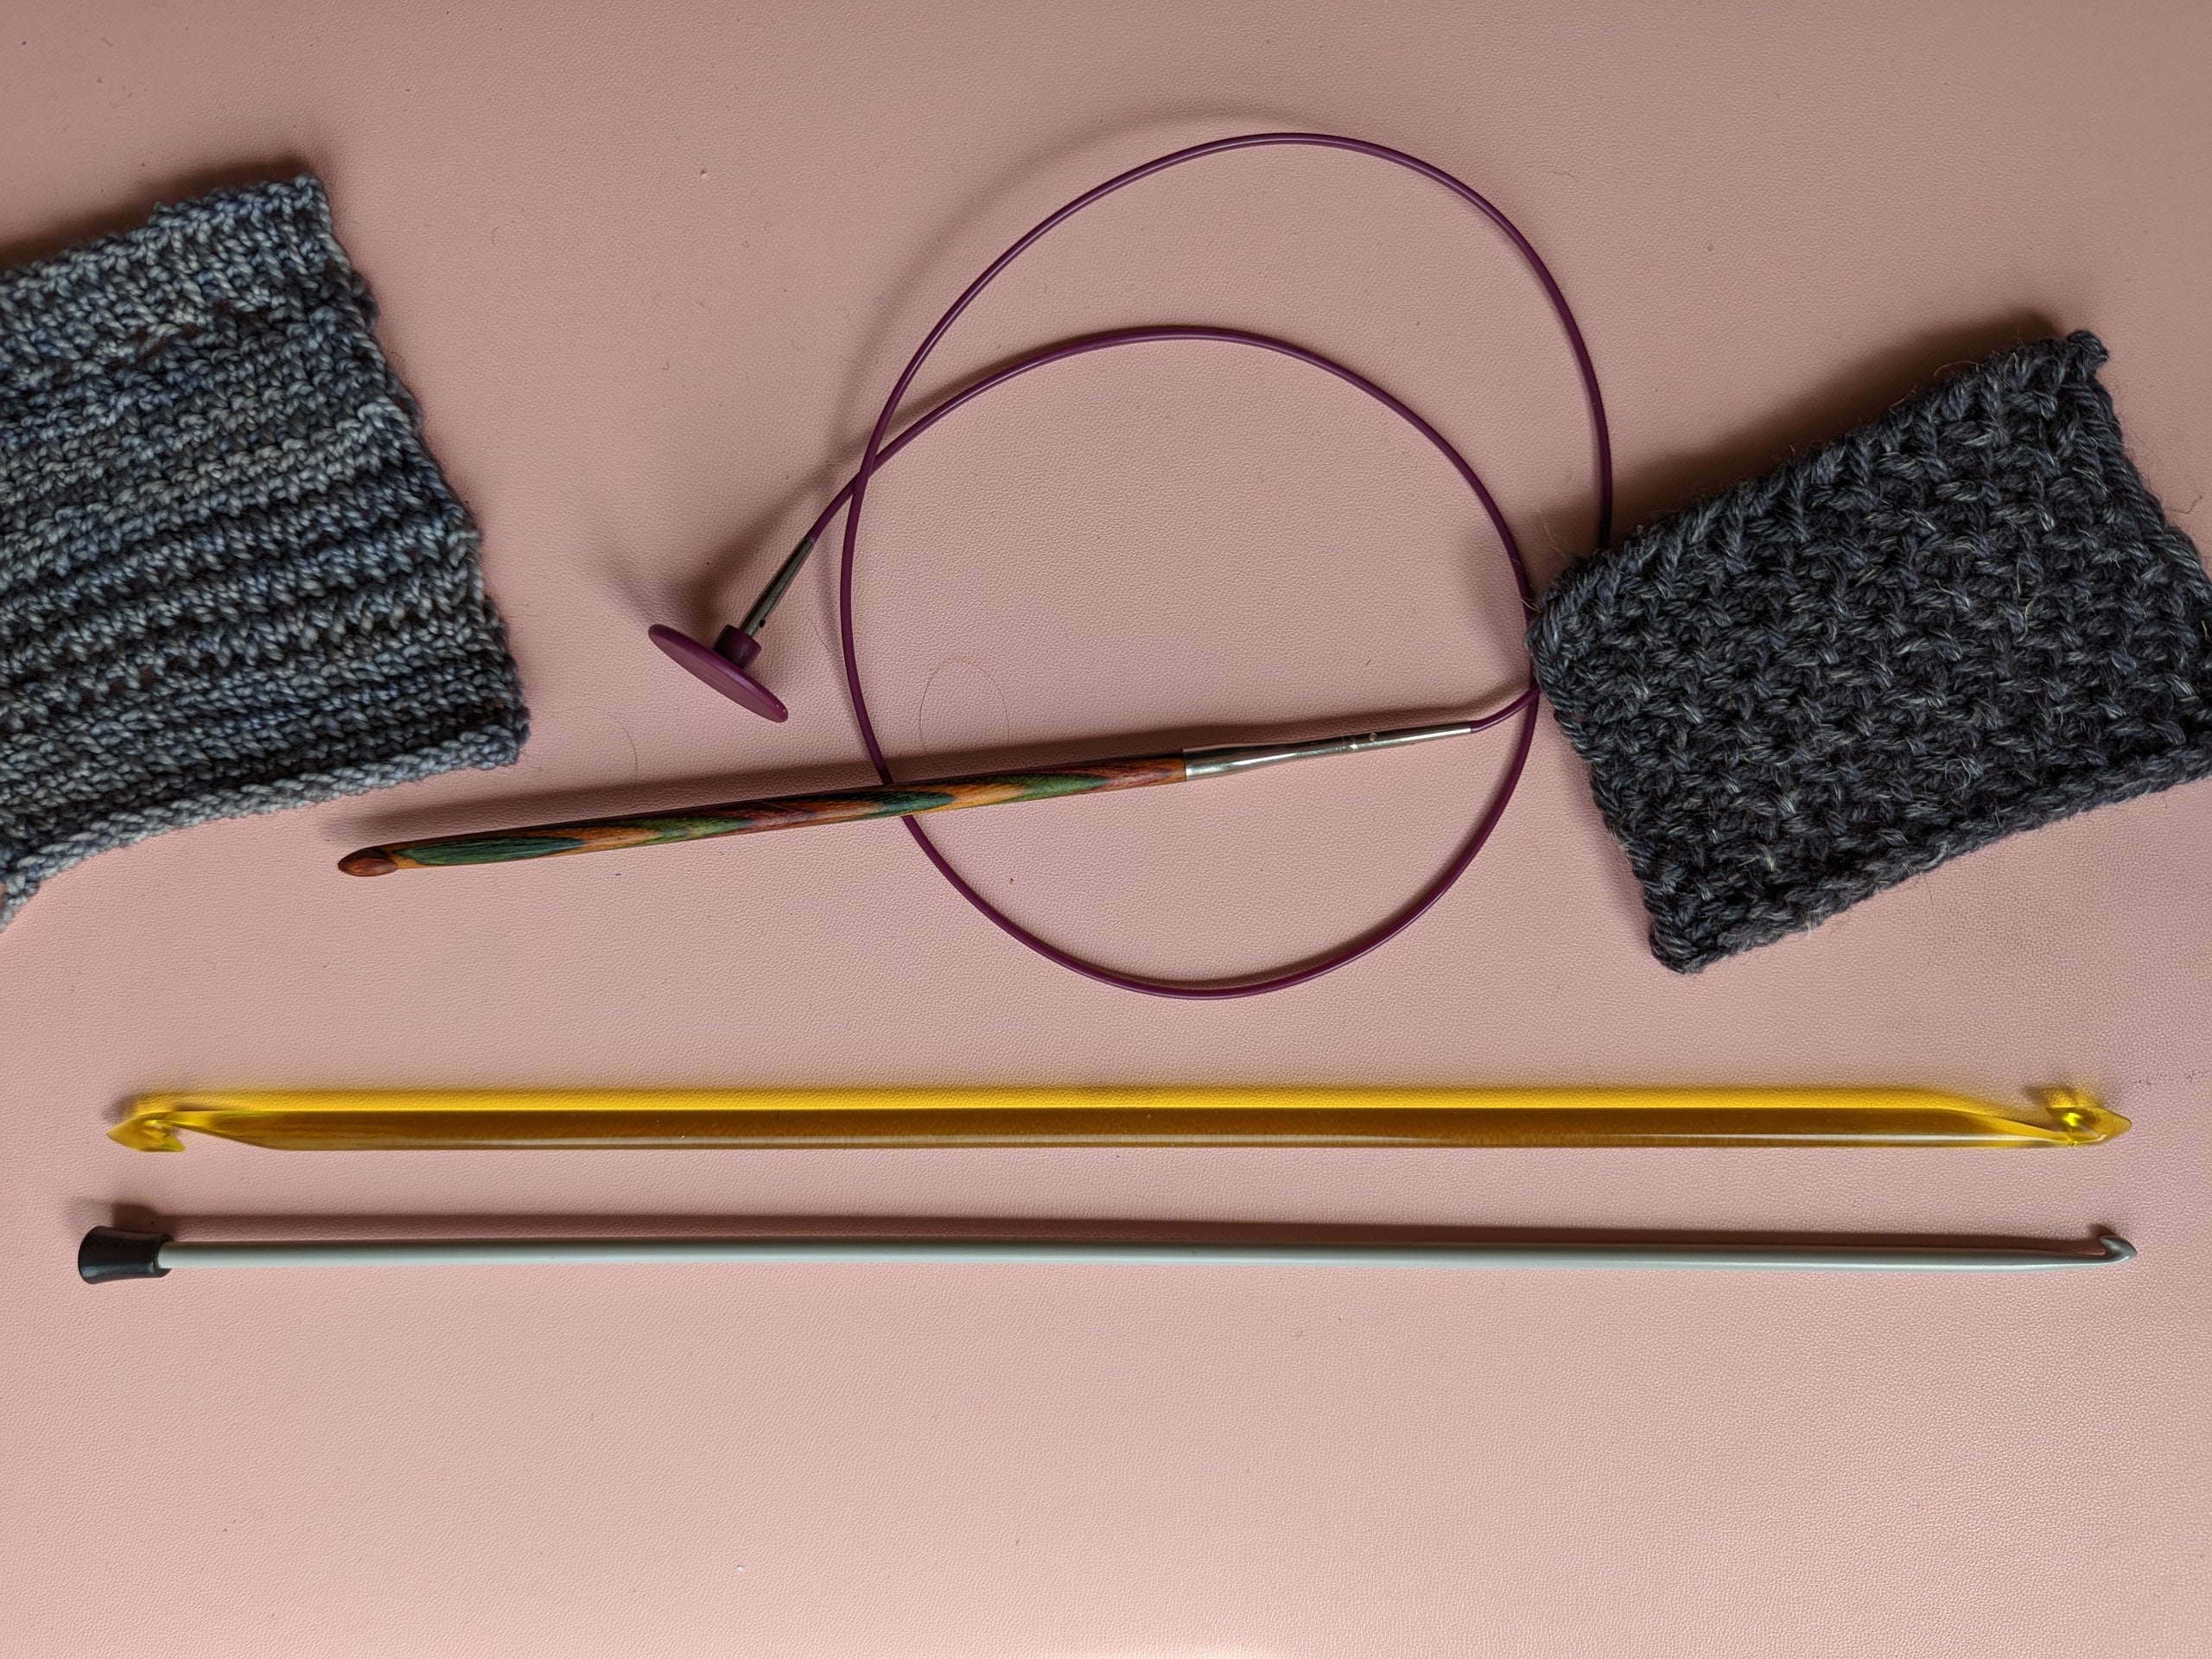 Crochet patterns to use up small amounts of yarn